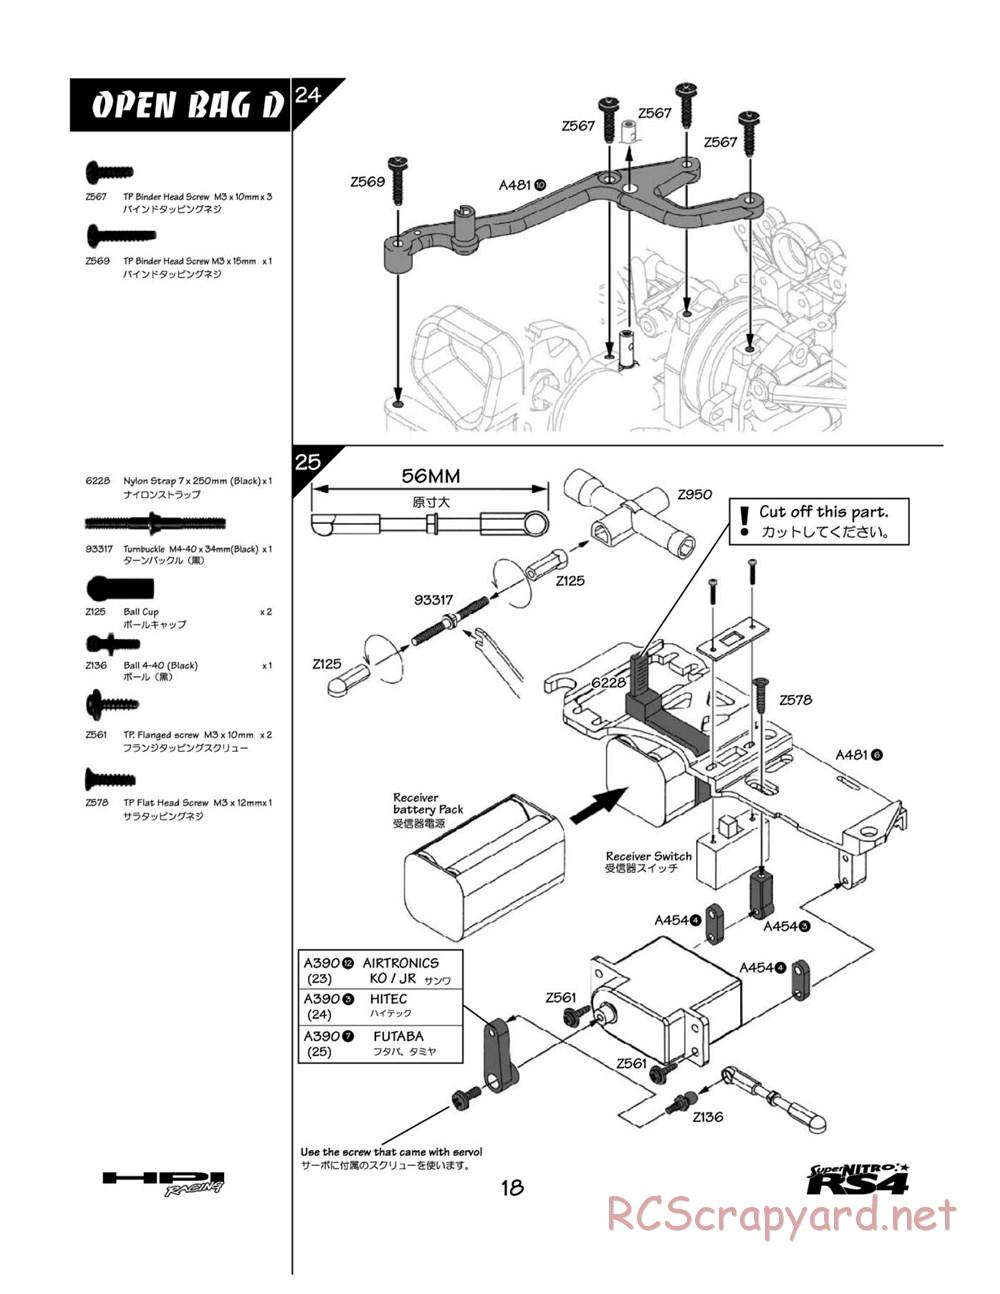 HPI - Super Nitro RS4 - Manual - Page 18